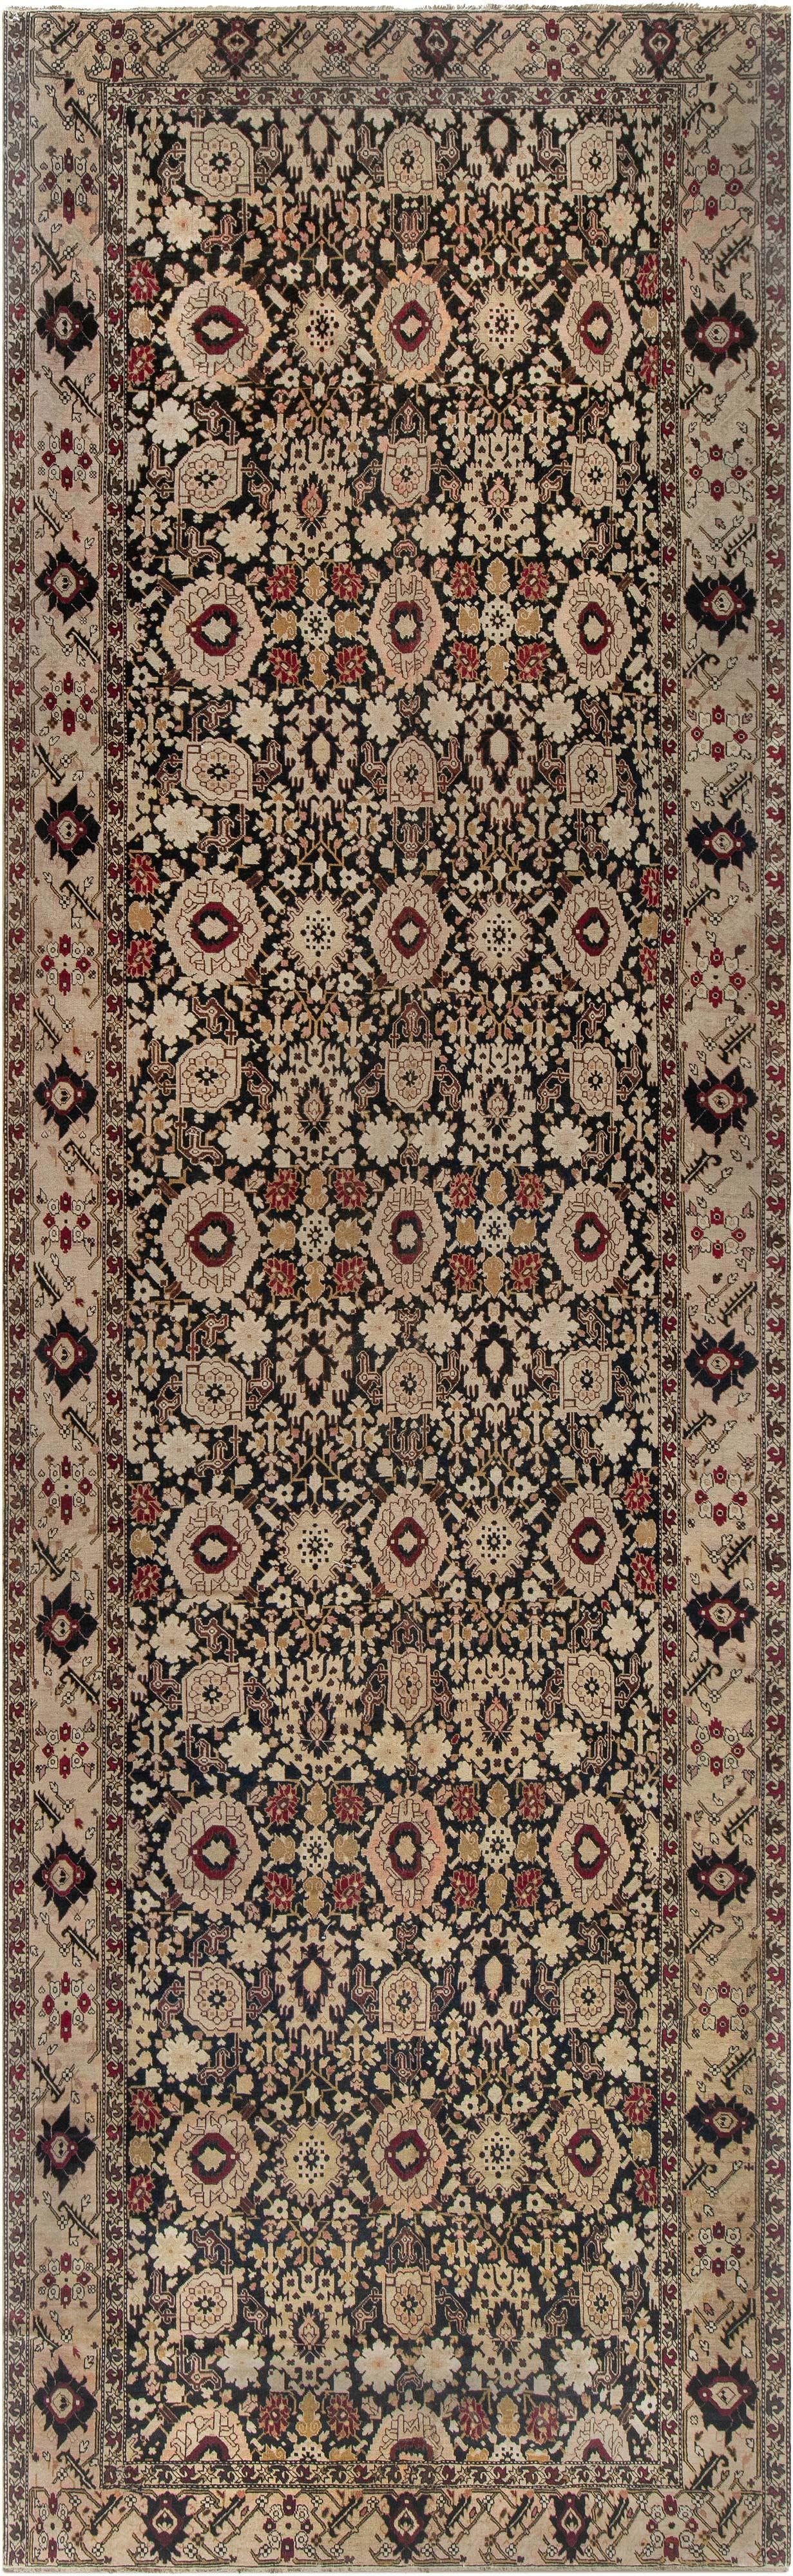 19th Century Karabagh Botanic Handmade Wool Carpet For Sale